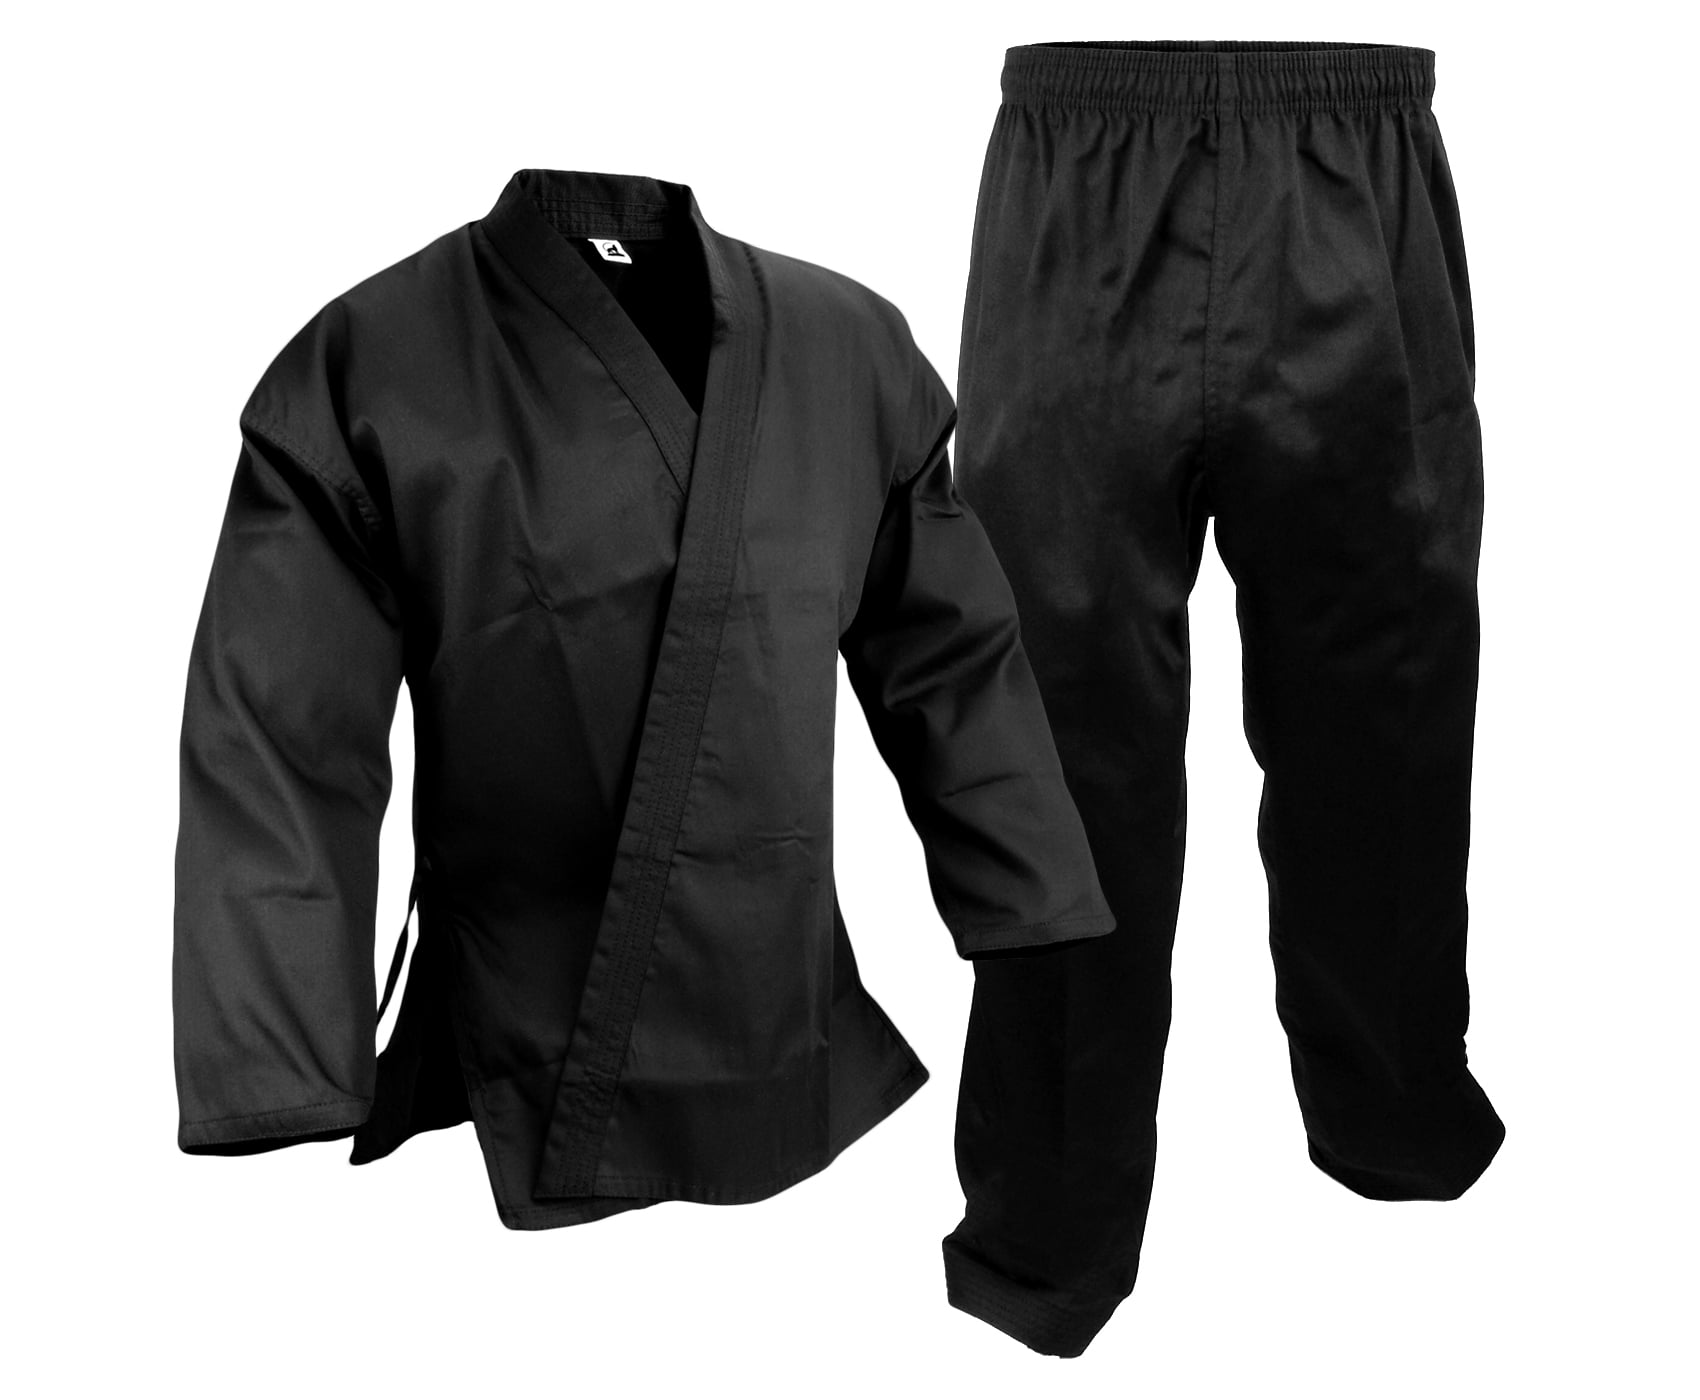 Details about   Black karate gi kimono made from 100% cotton martial arts uniform 